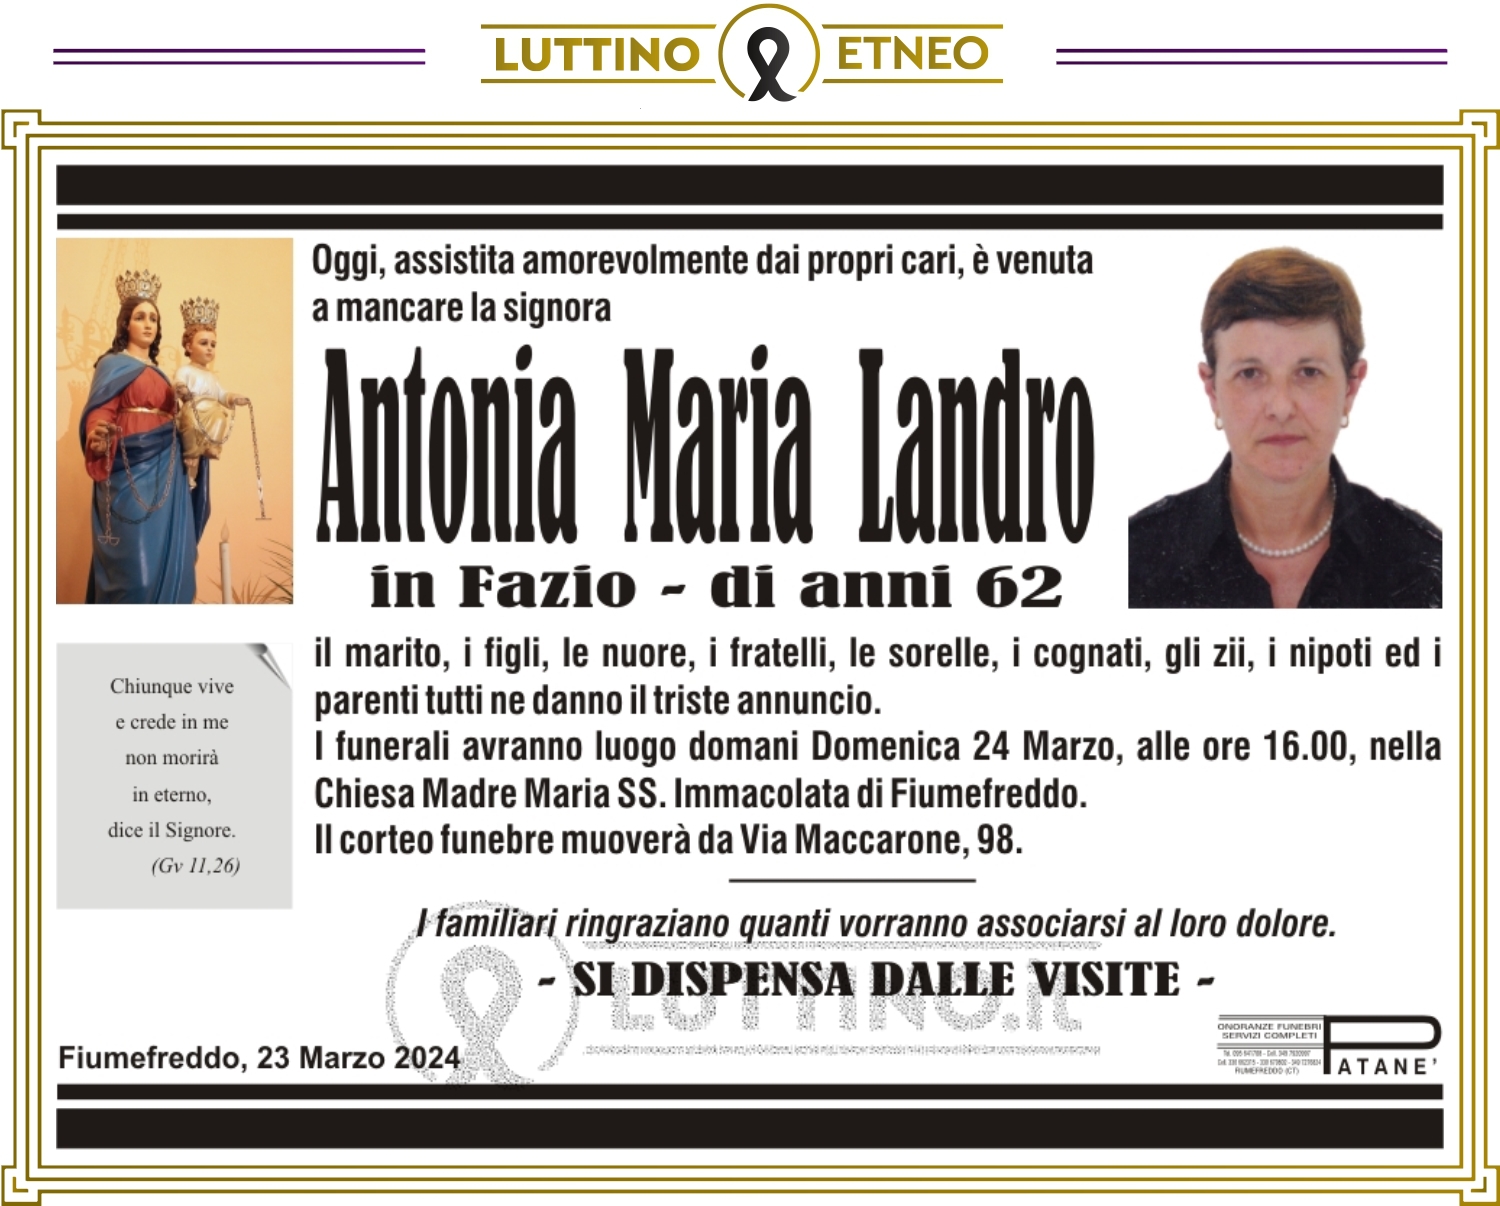 Antonia Maria Landro